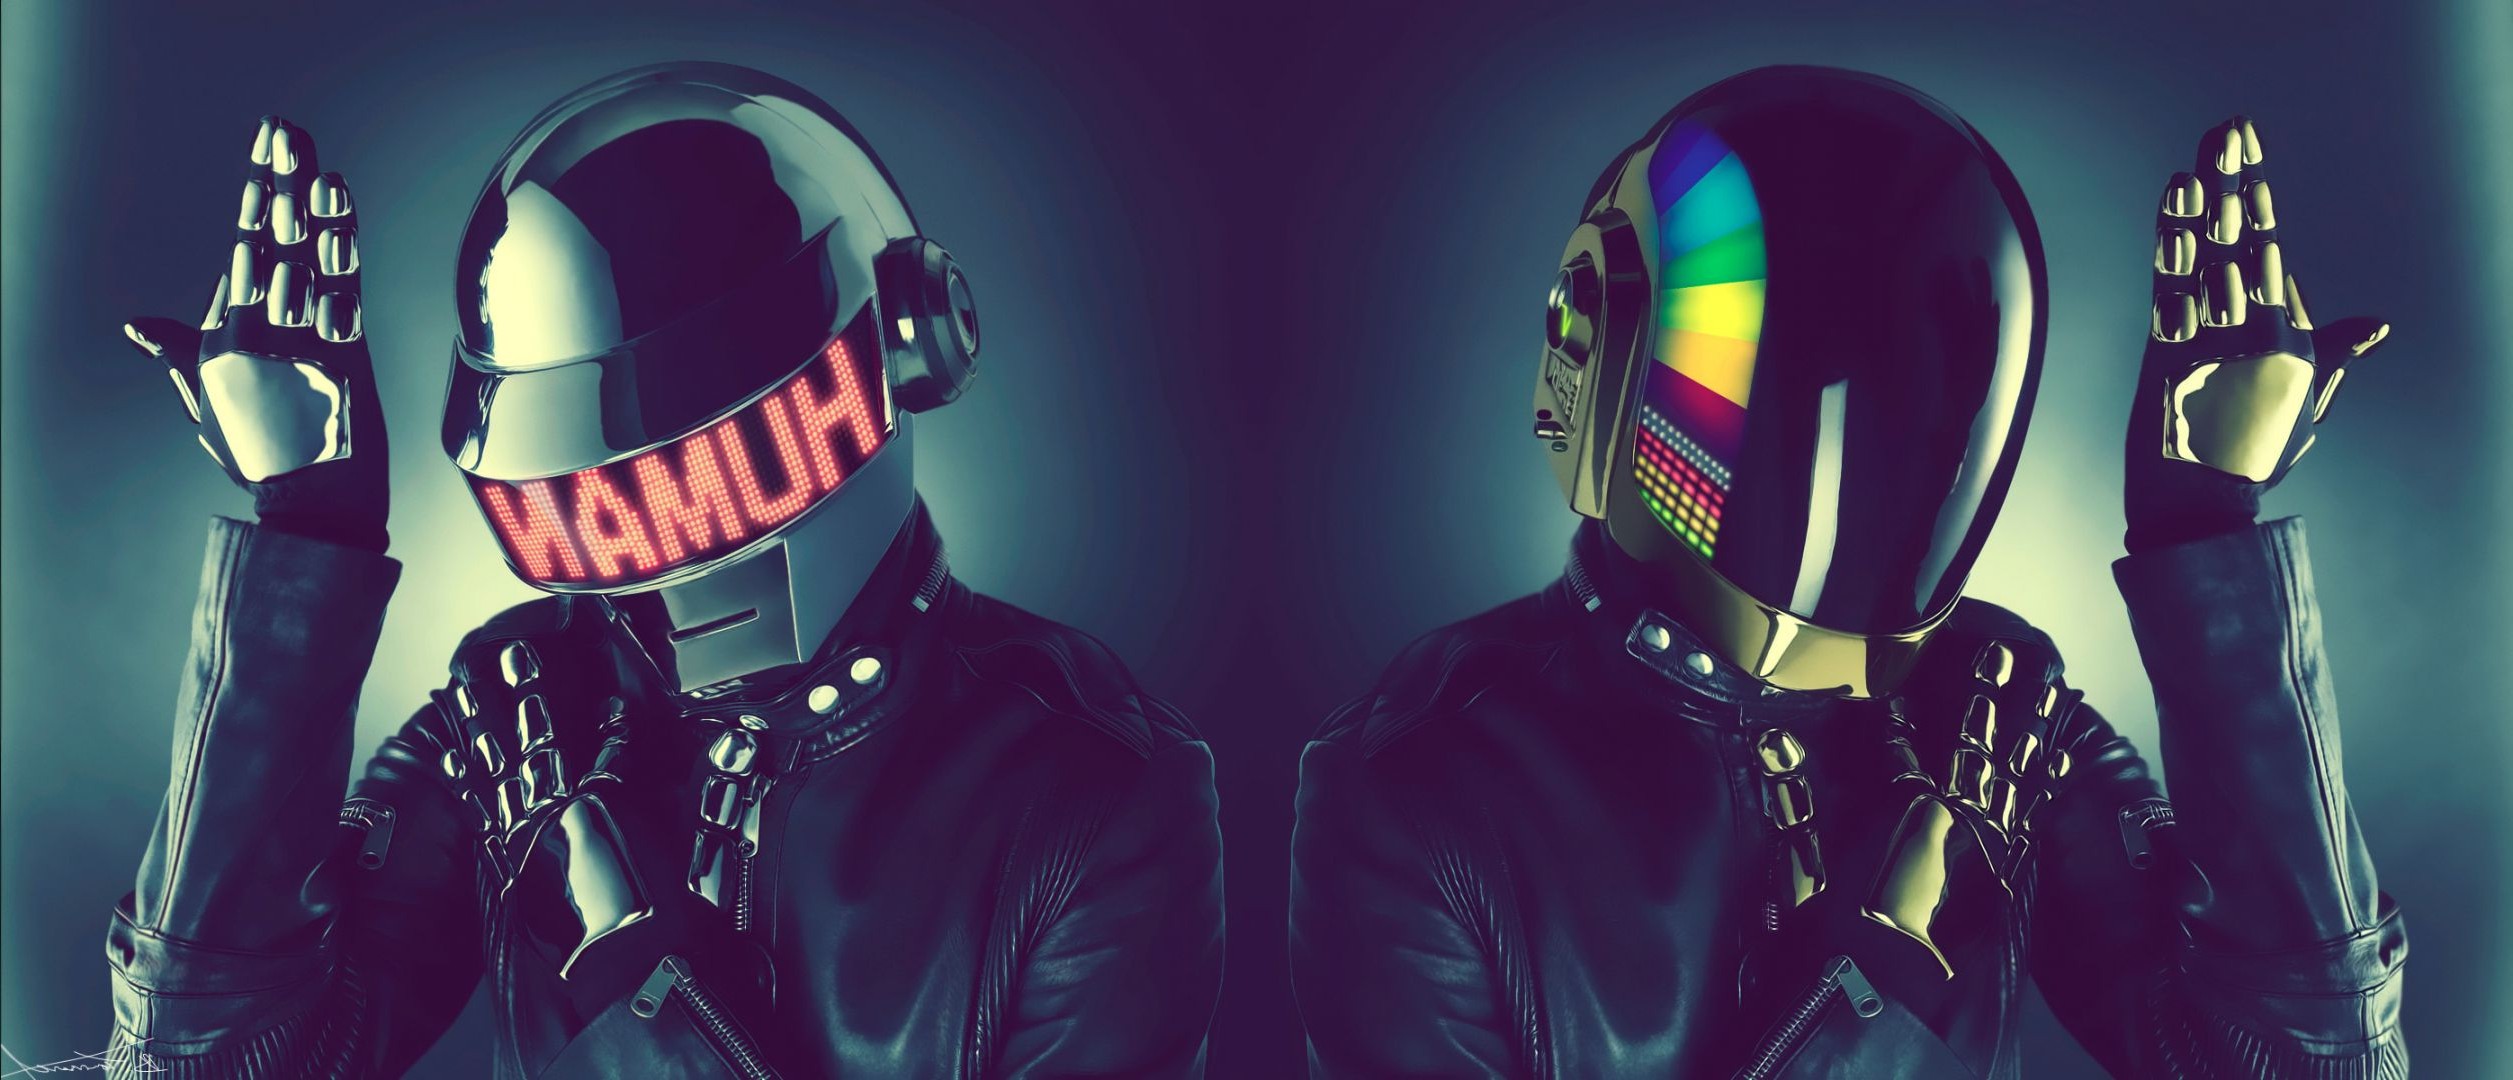 music helmet futuristic man future technology